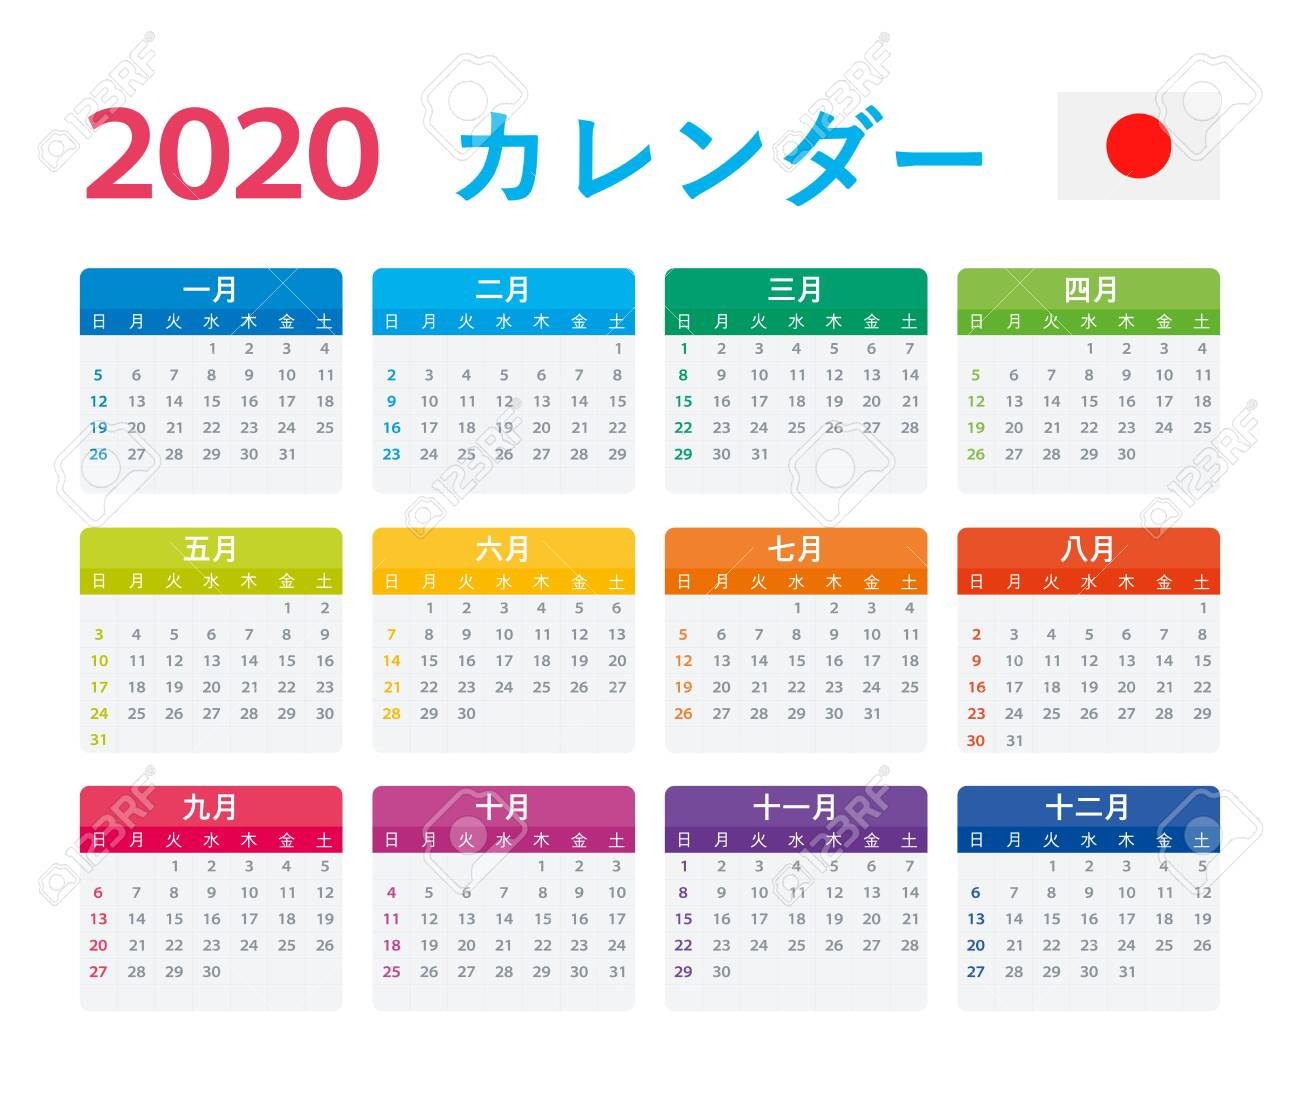 Vector Template Of Color 2020 Calendar - Japanese Version